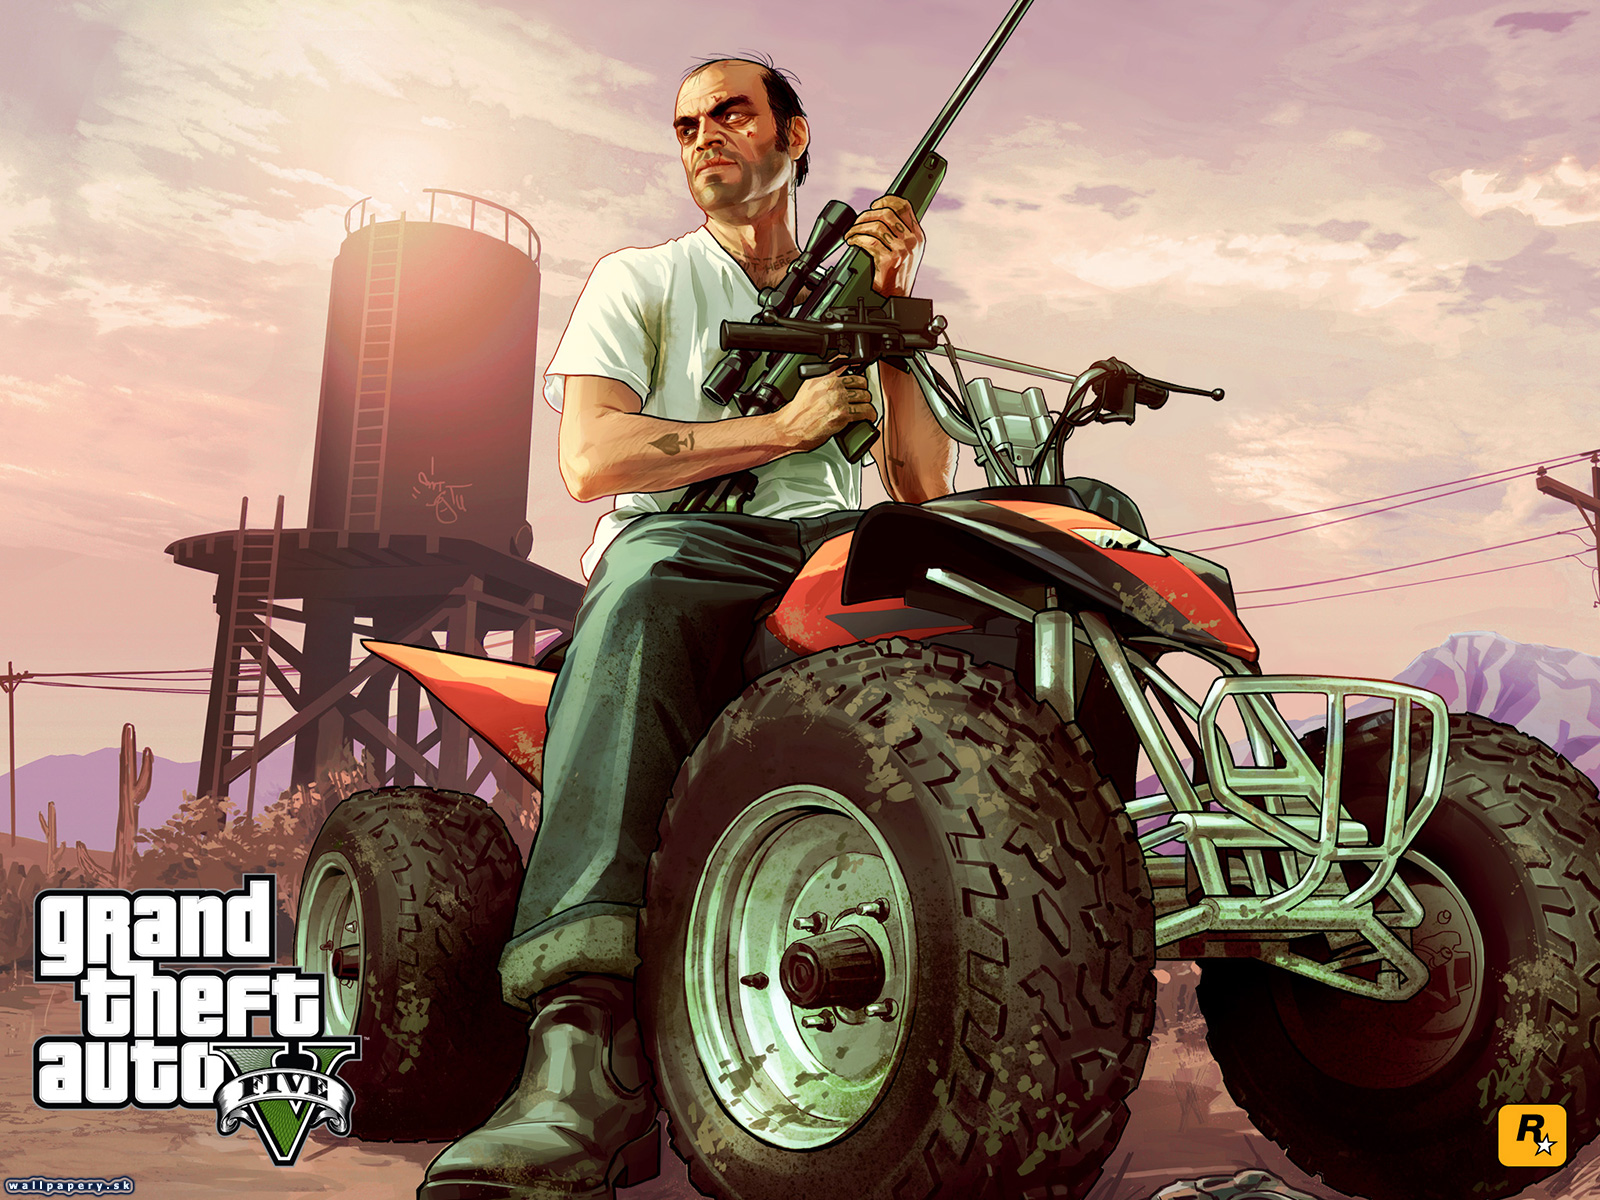 Grand Theft Auto V - wallpaper 11